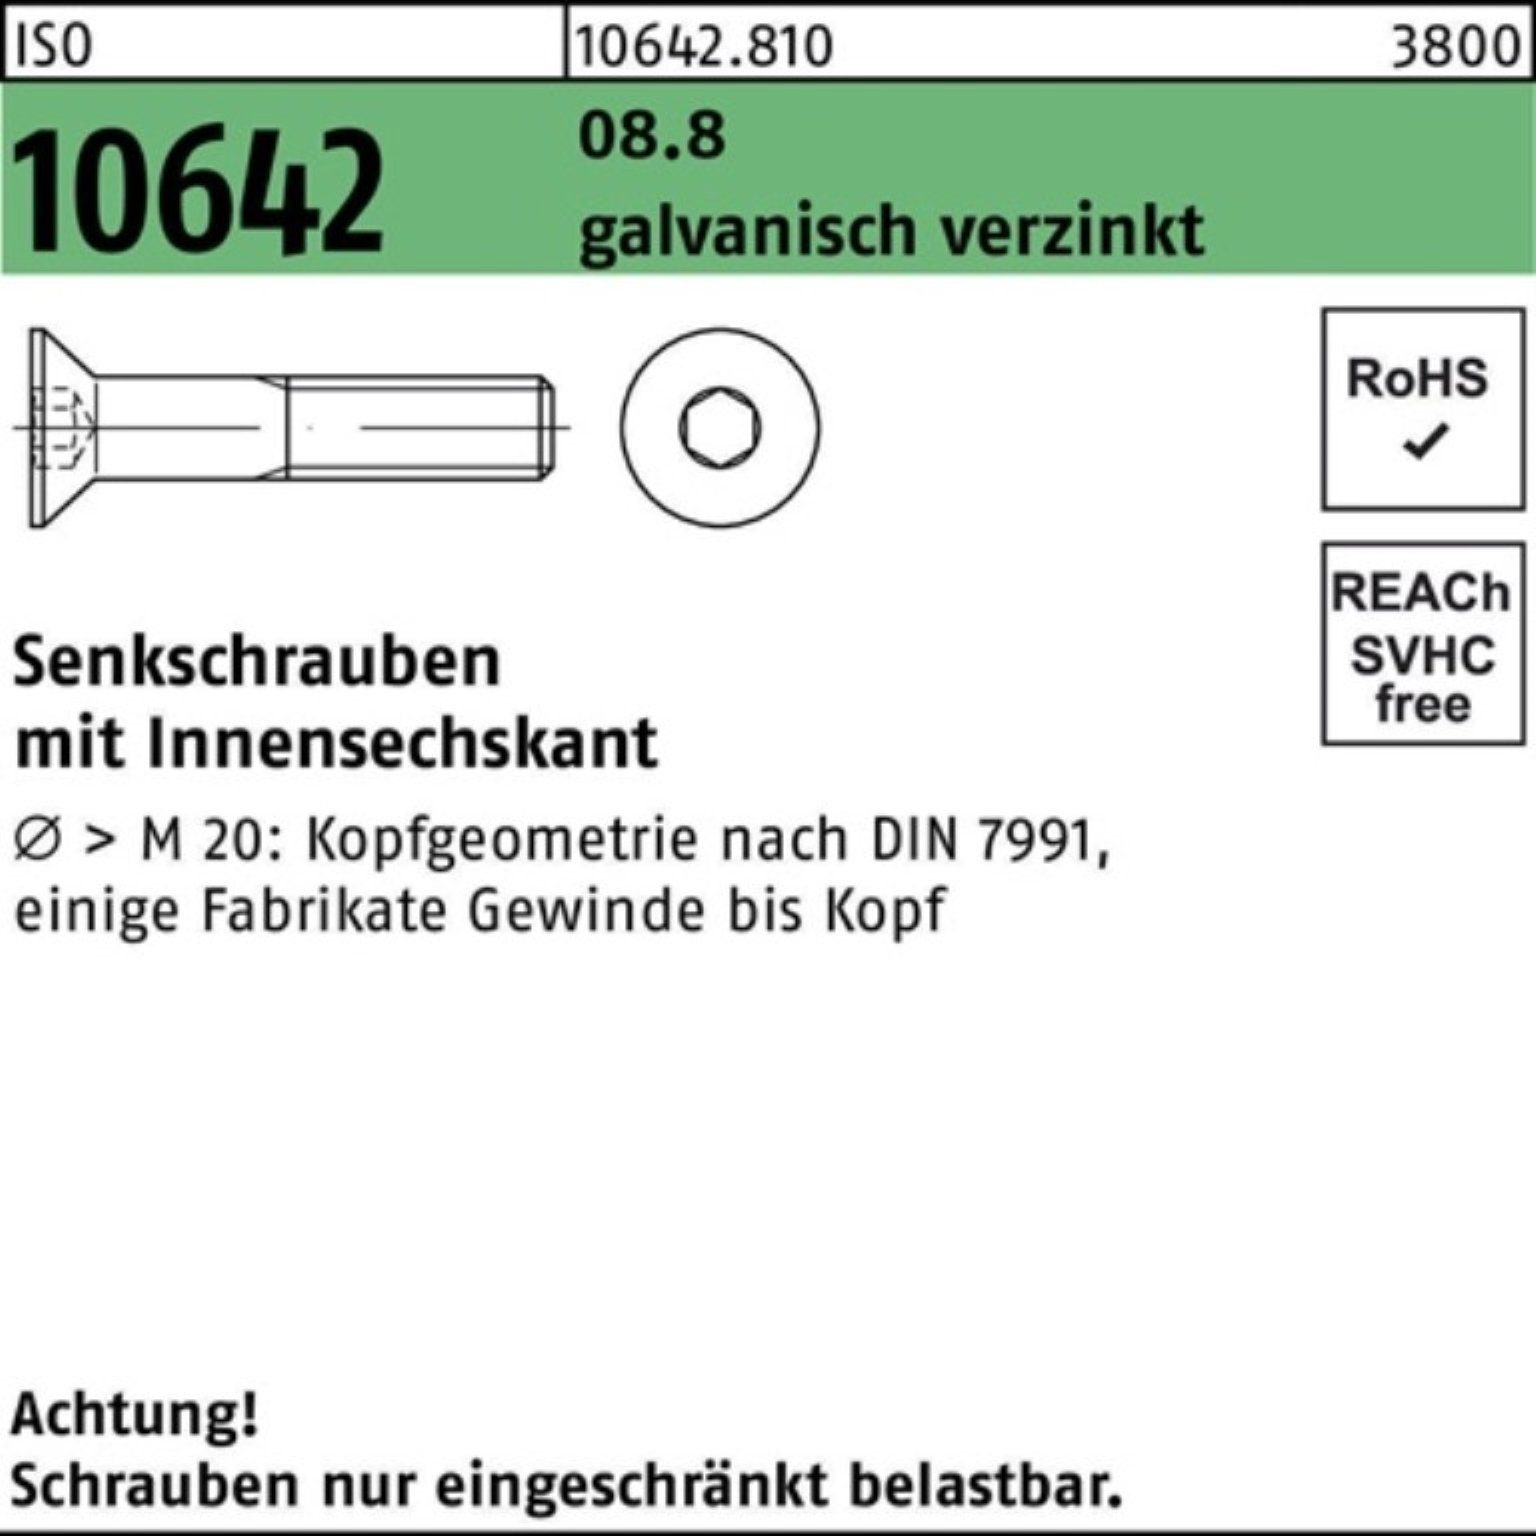 Reyher Senkschraube 100 Innen-6kt Senkschraube 8.8 100er 10642 M20x 25 ISO galv.verz. Pack